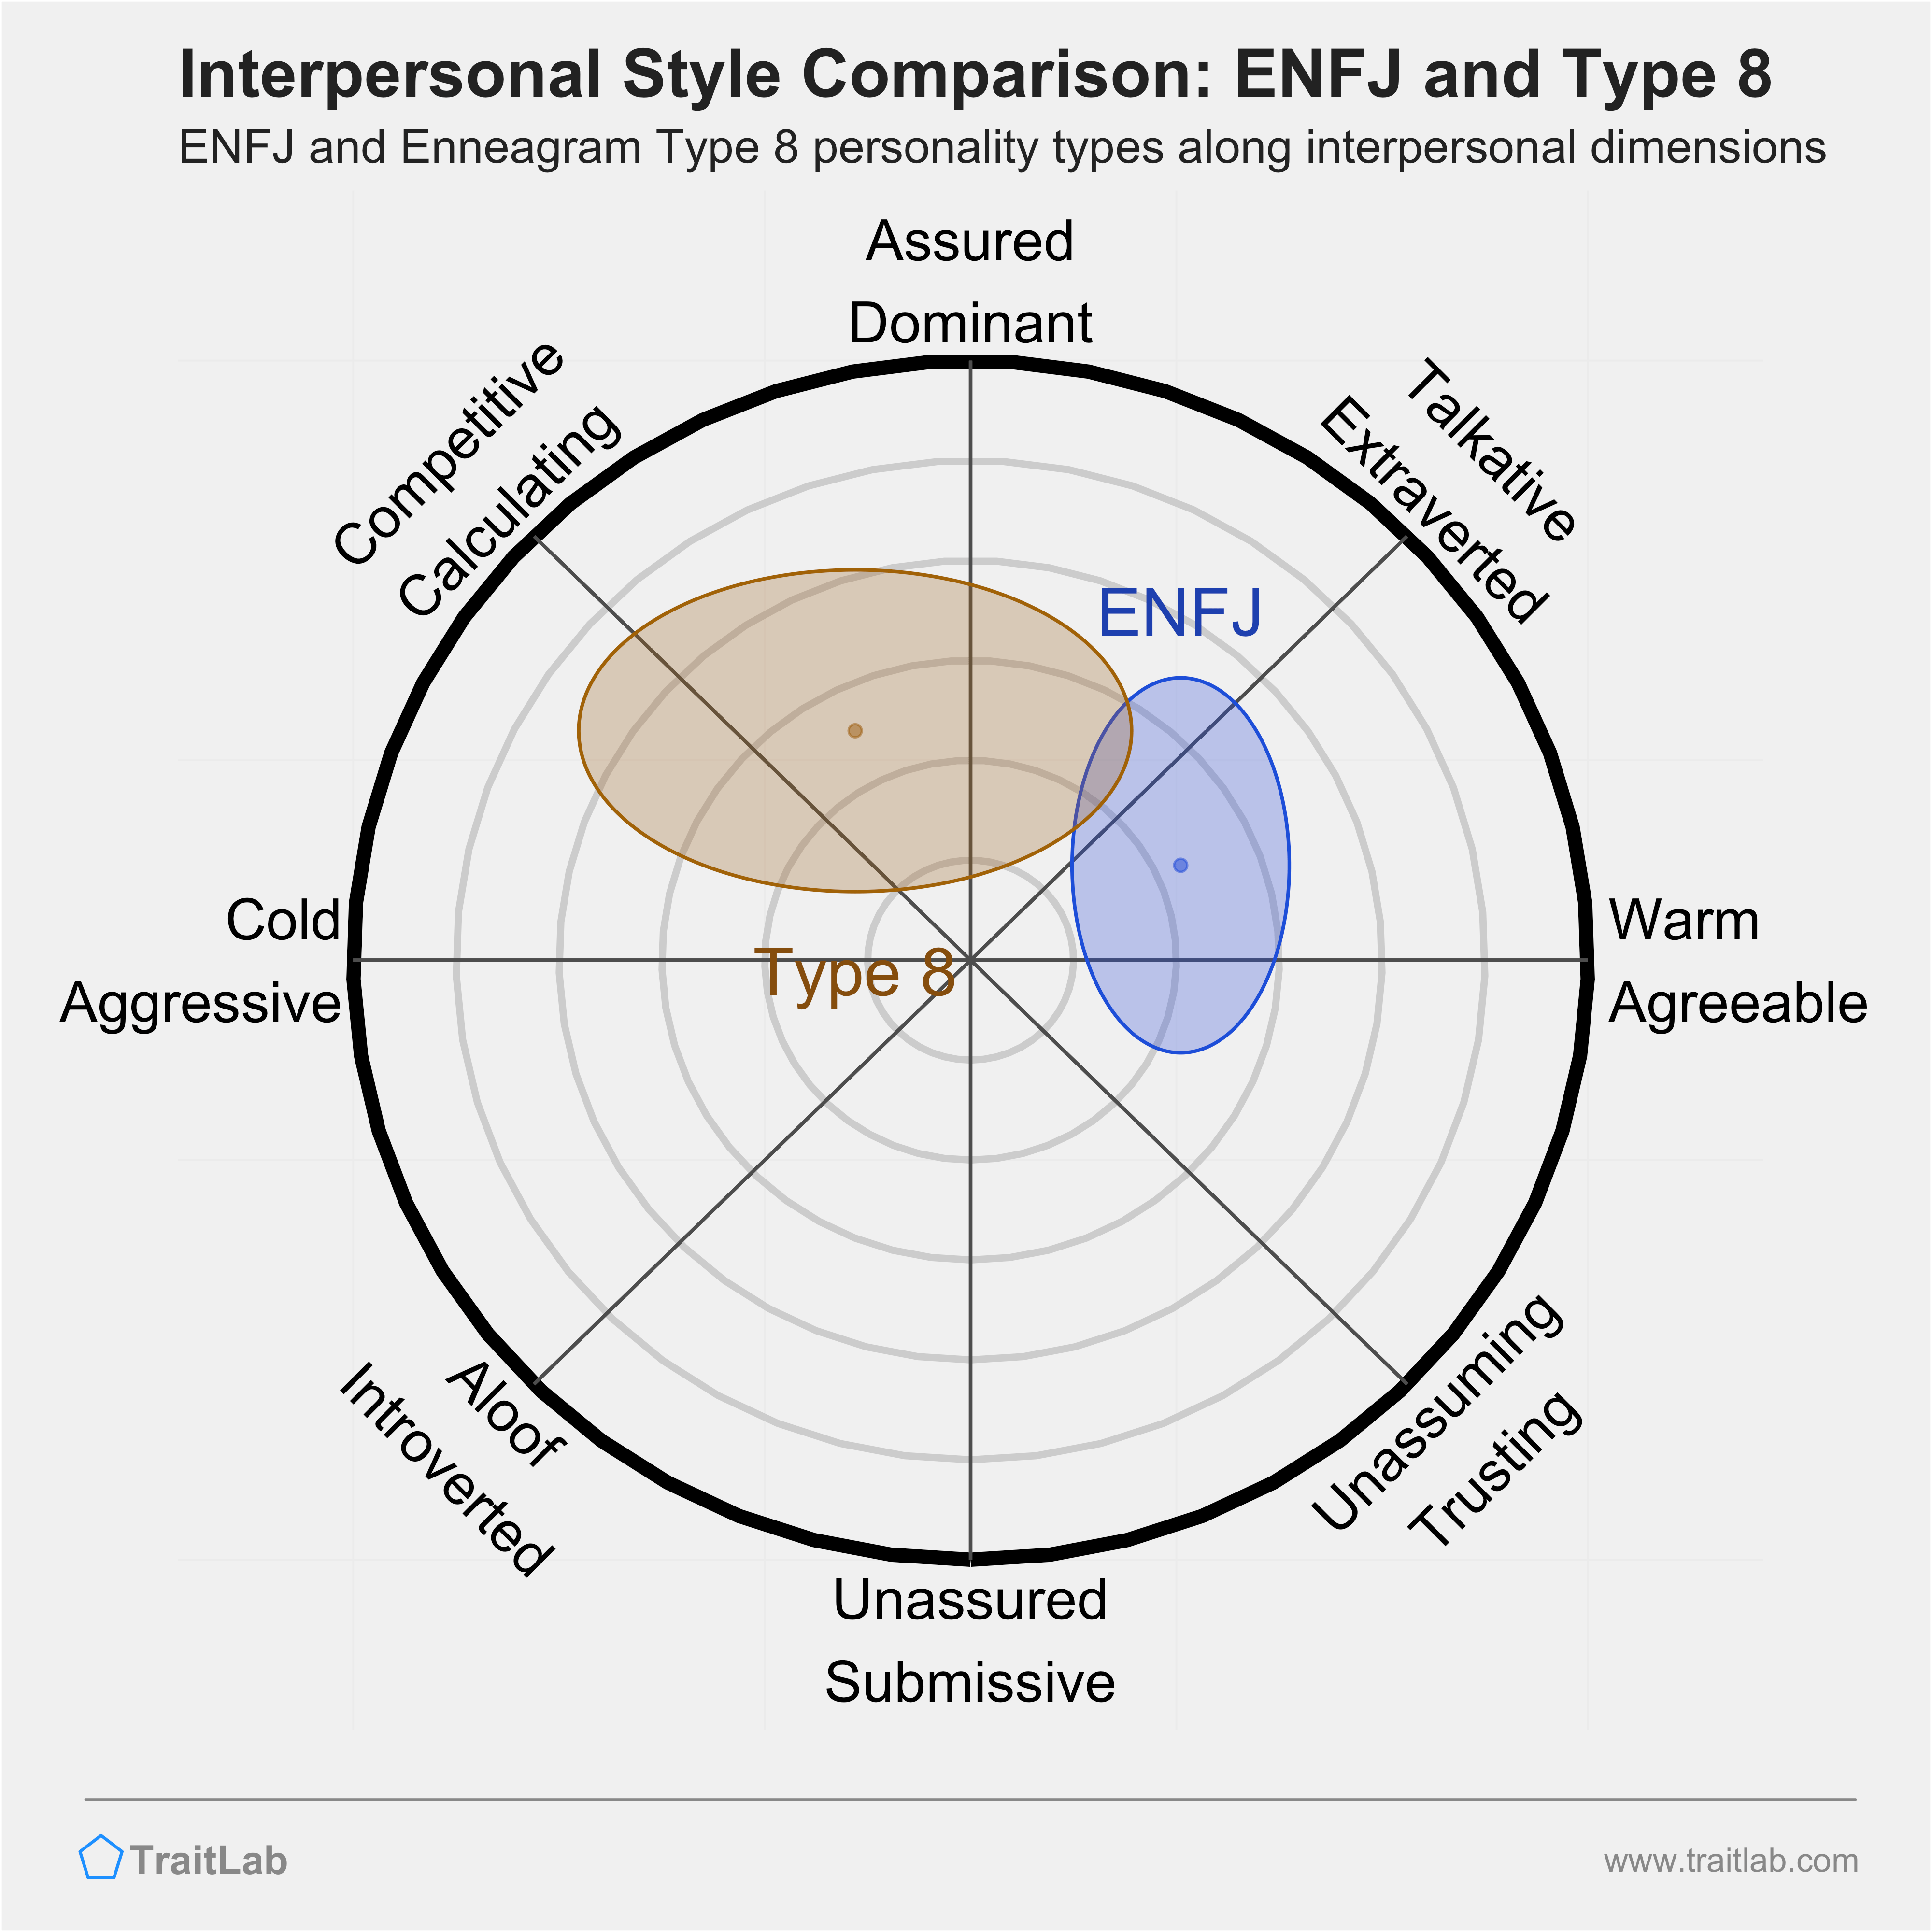 Enneagram ENFJ and Type 8 comparison across interpersonal dimensions